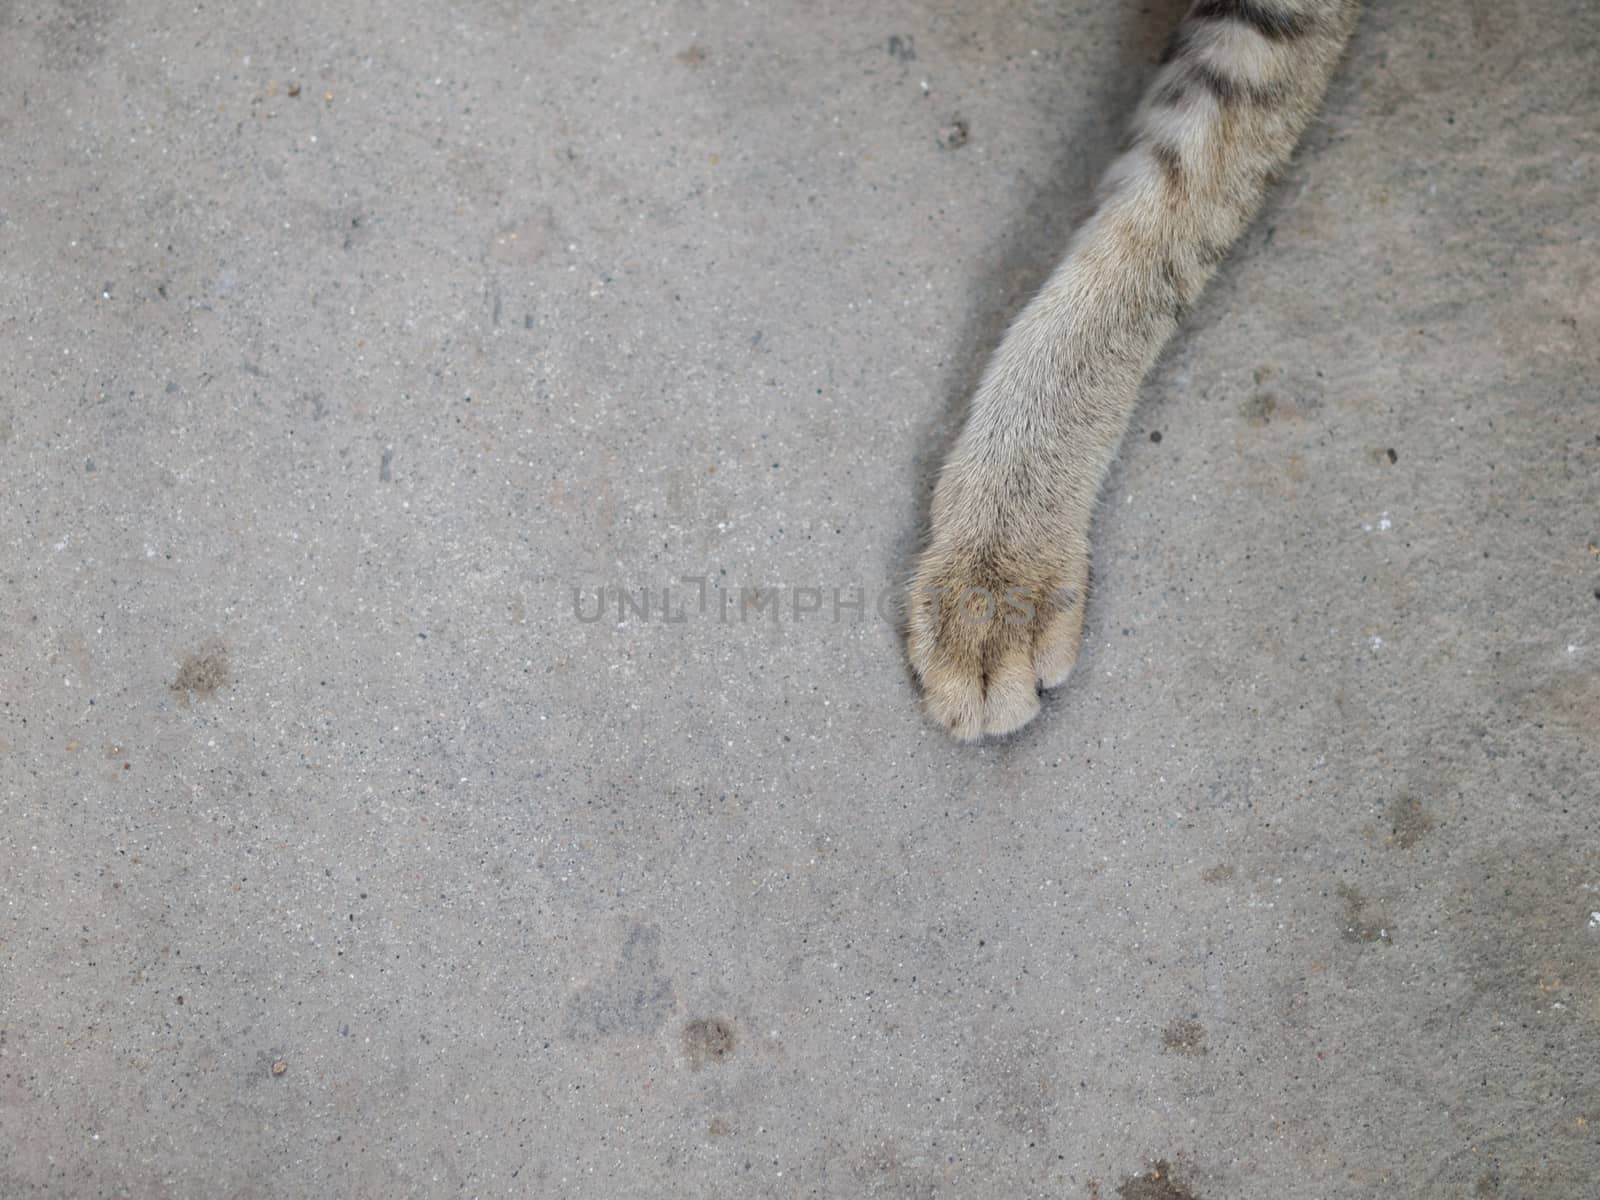 COLOR PHOTO OF CAT'S PAW ON PLAIN CONCRETE GROUND